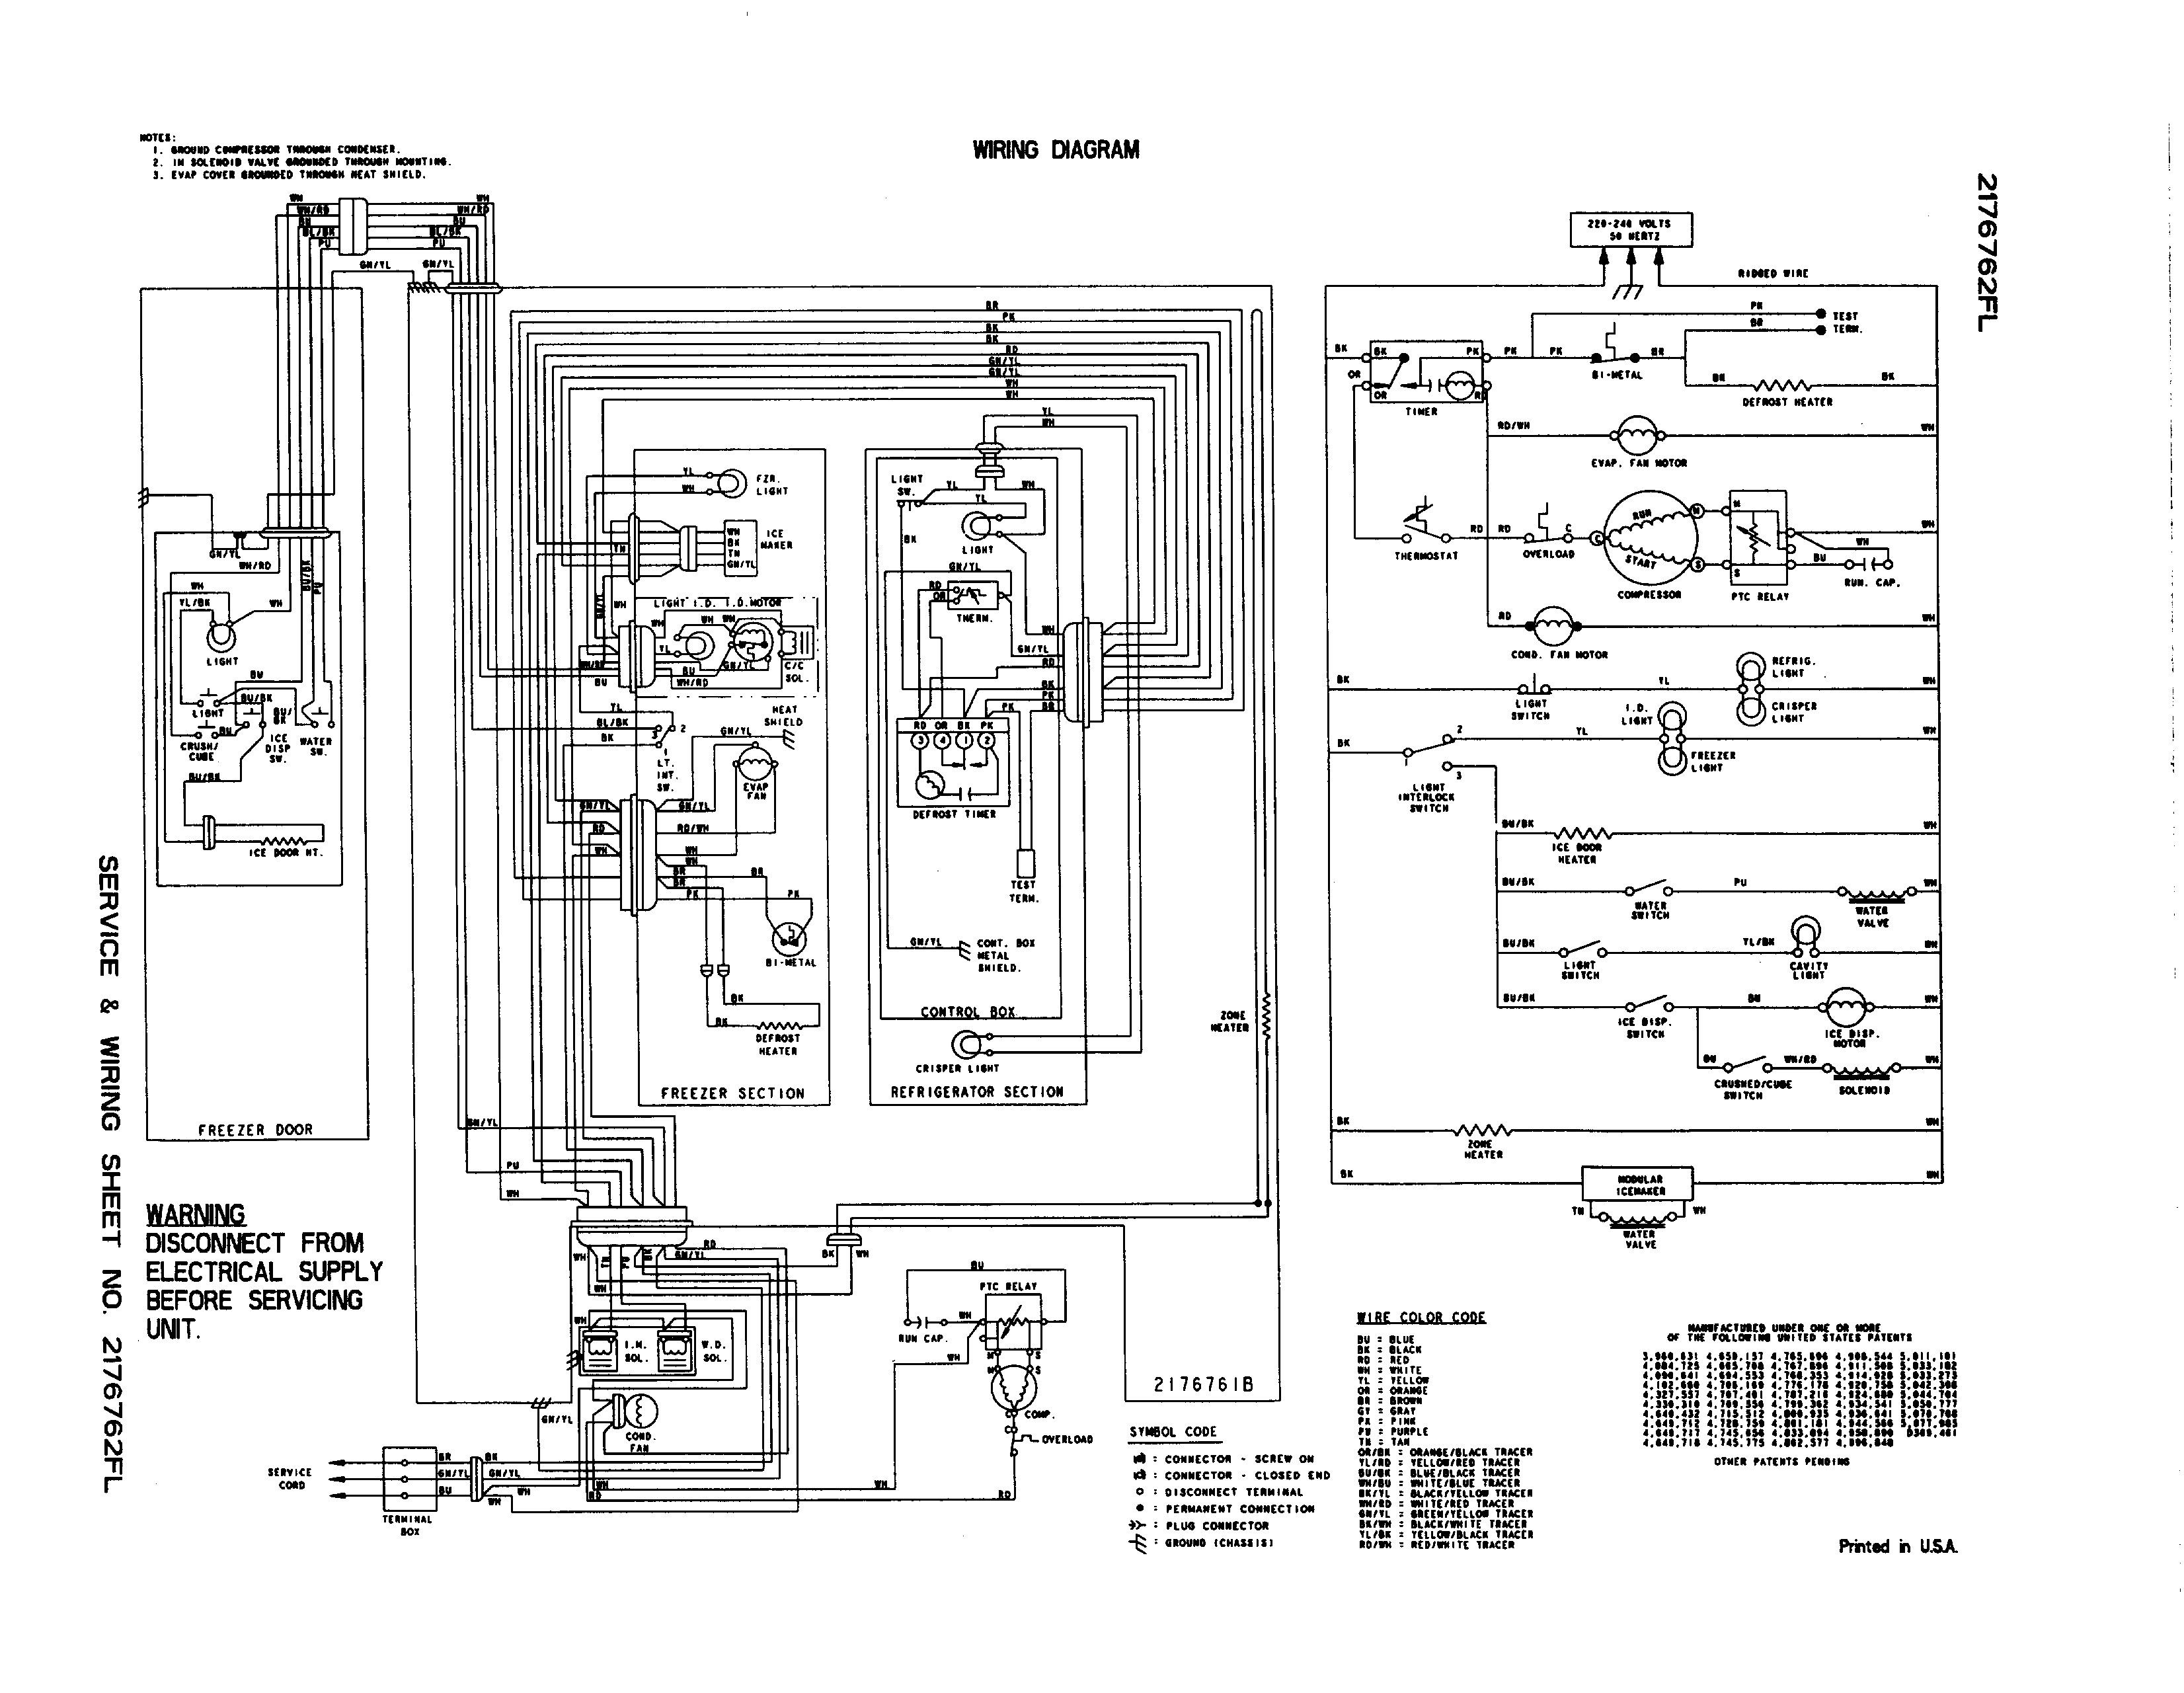 Whirlpool Gold Refrigerator Wiring Diagram | Wiring Diagram - Refrigerator Wiring Diagram Pdf